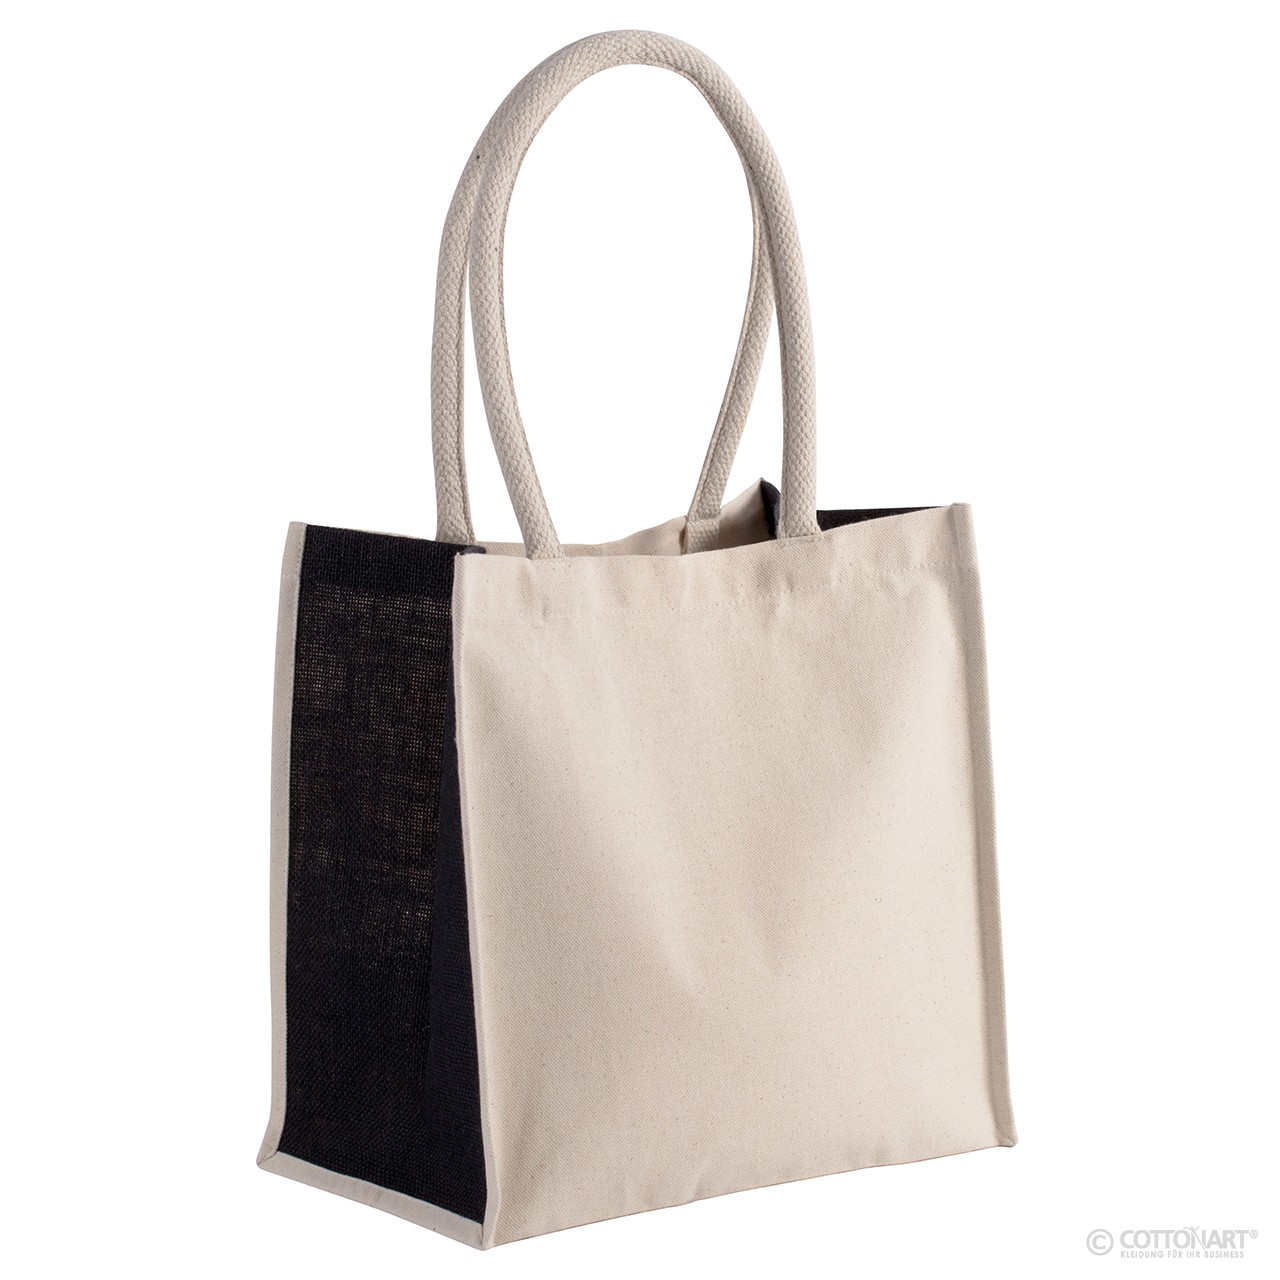 Cotton jute shopping bag 30 x 19 x 30 cm KiMood® Natural / Black